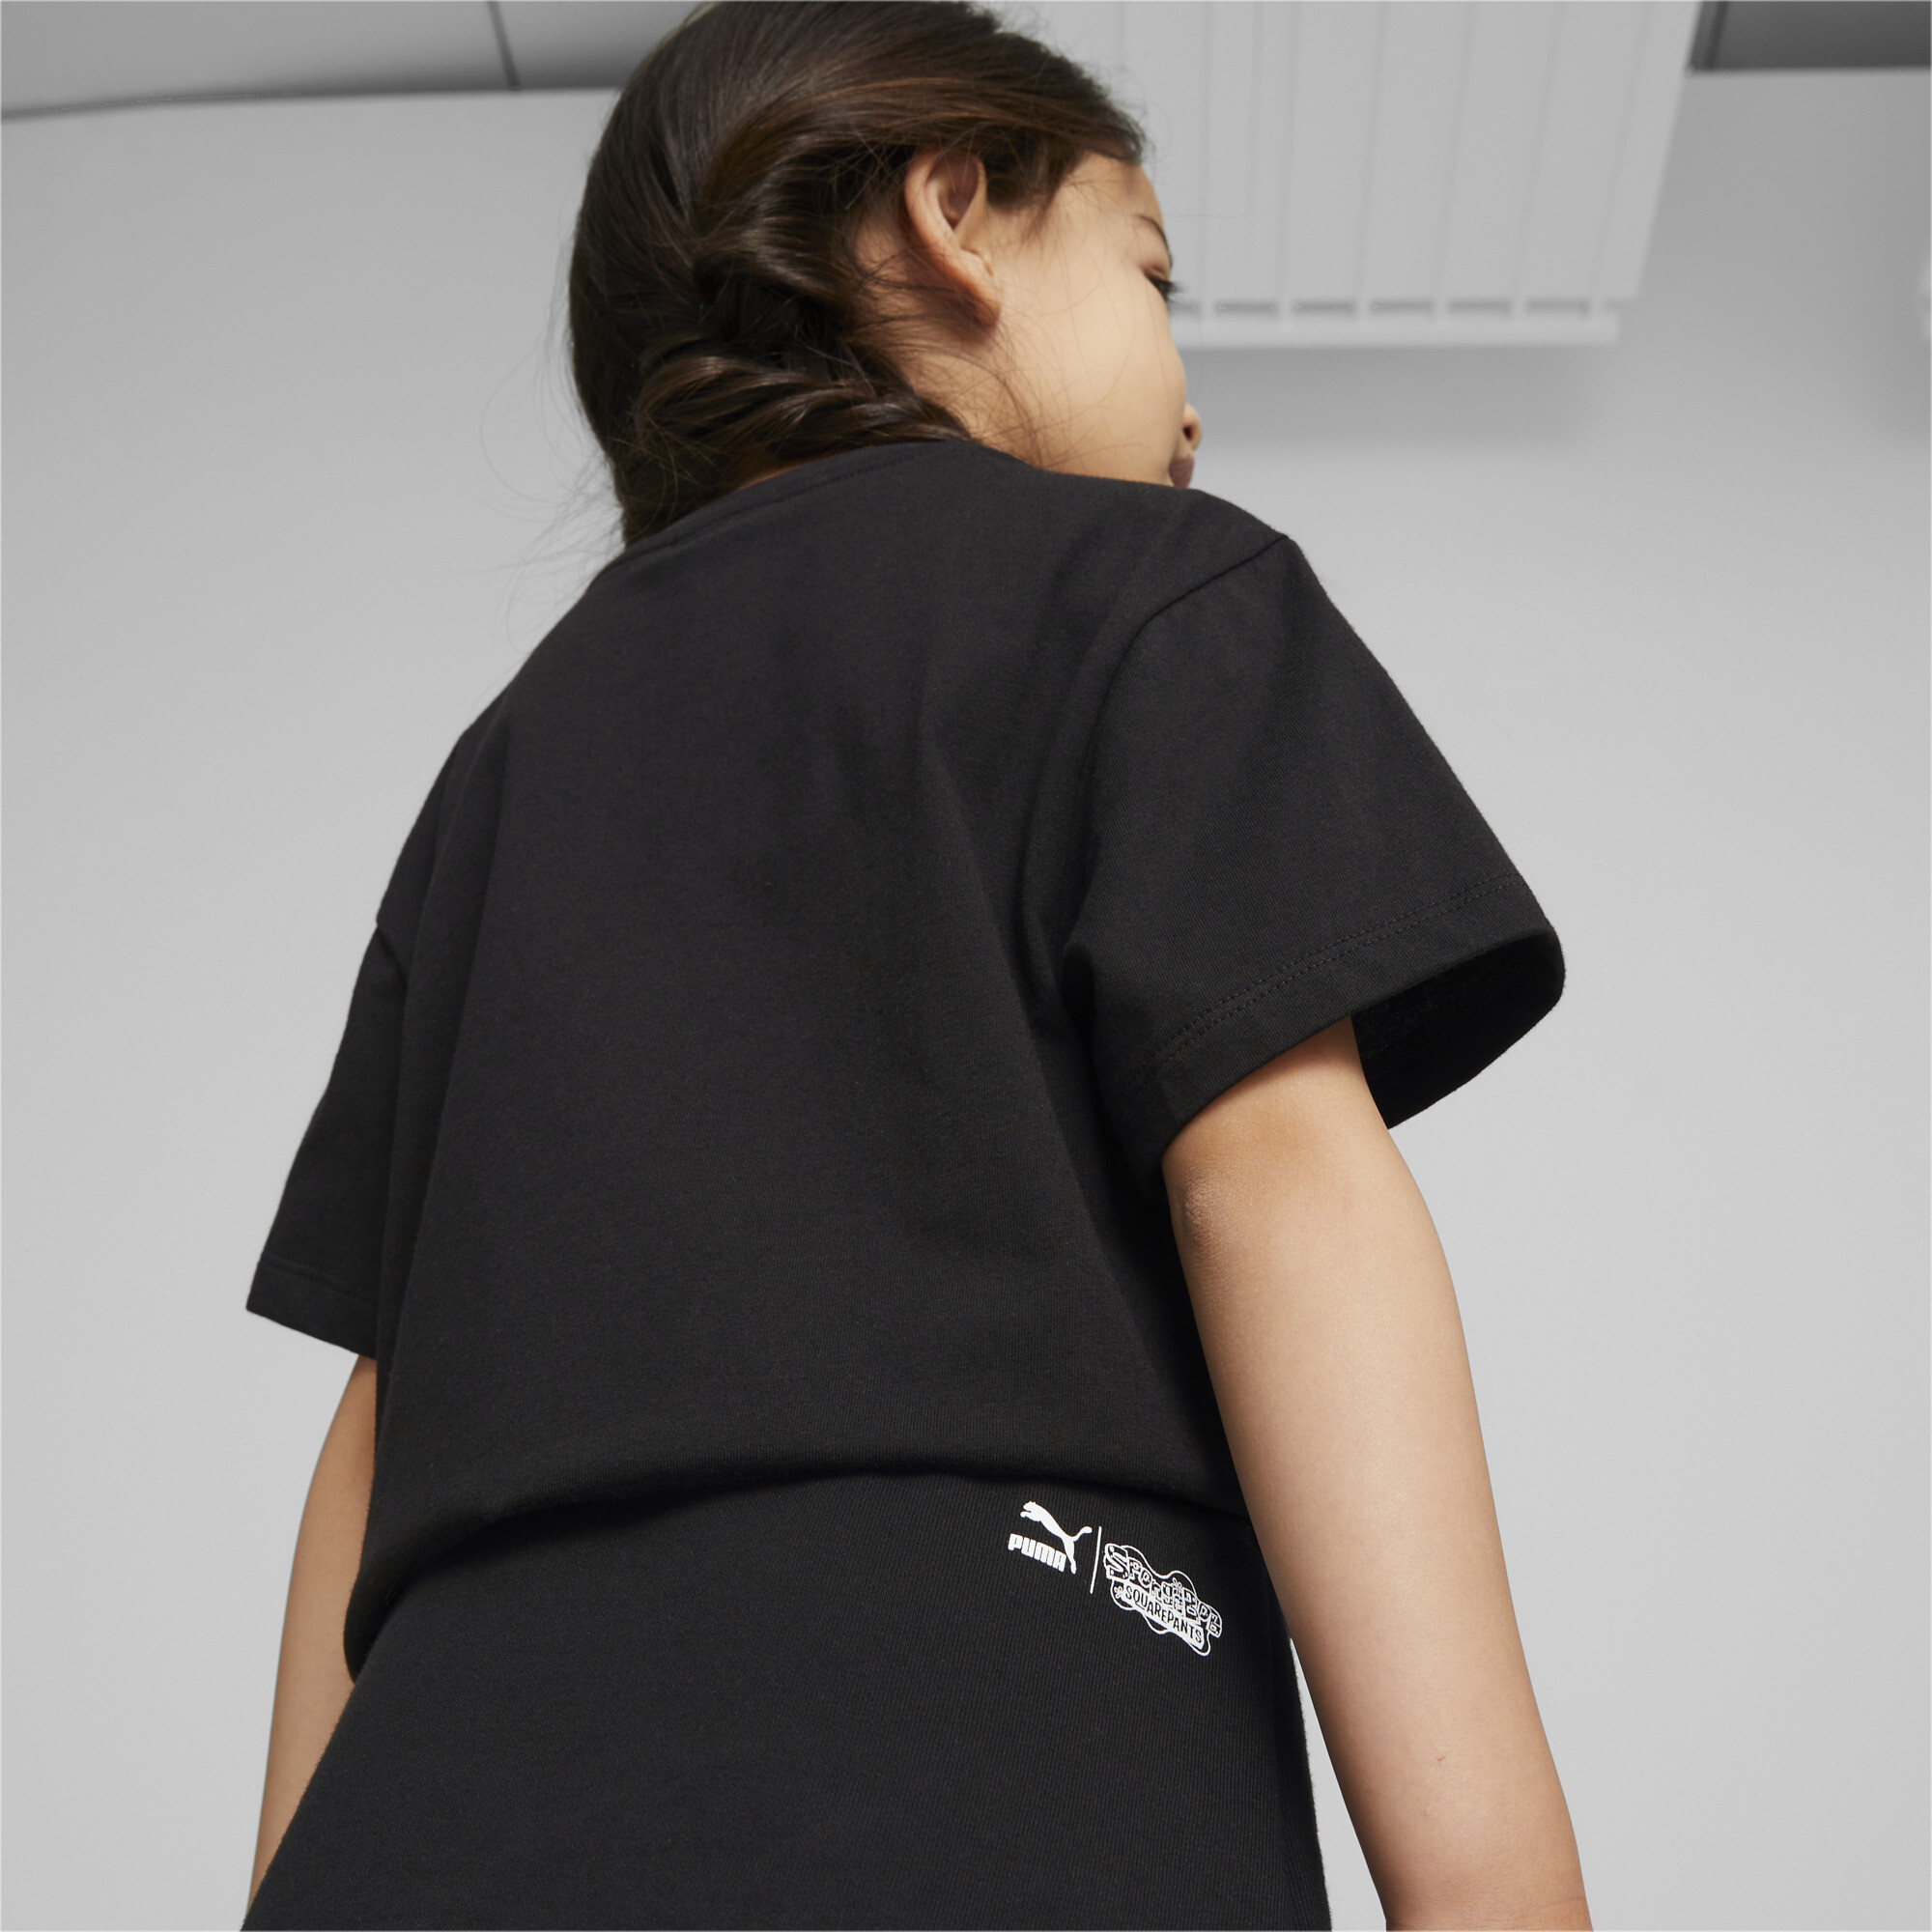 PUMA X SPONGEBOB Skirt Kids In Black, Size 13-14 Youth